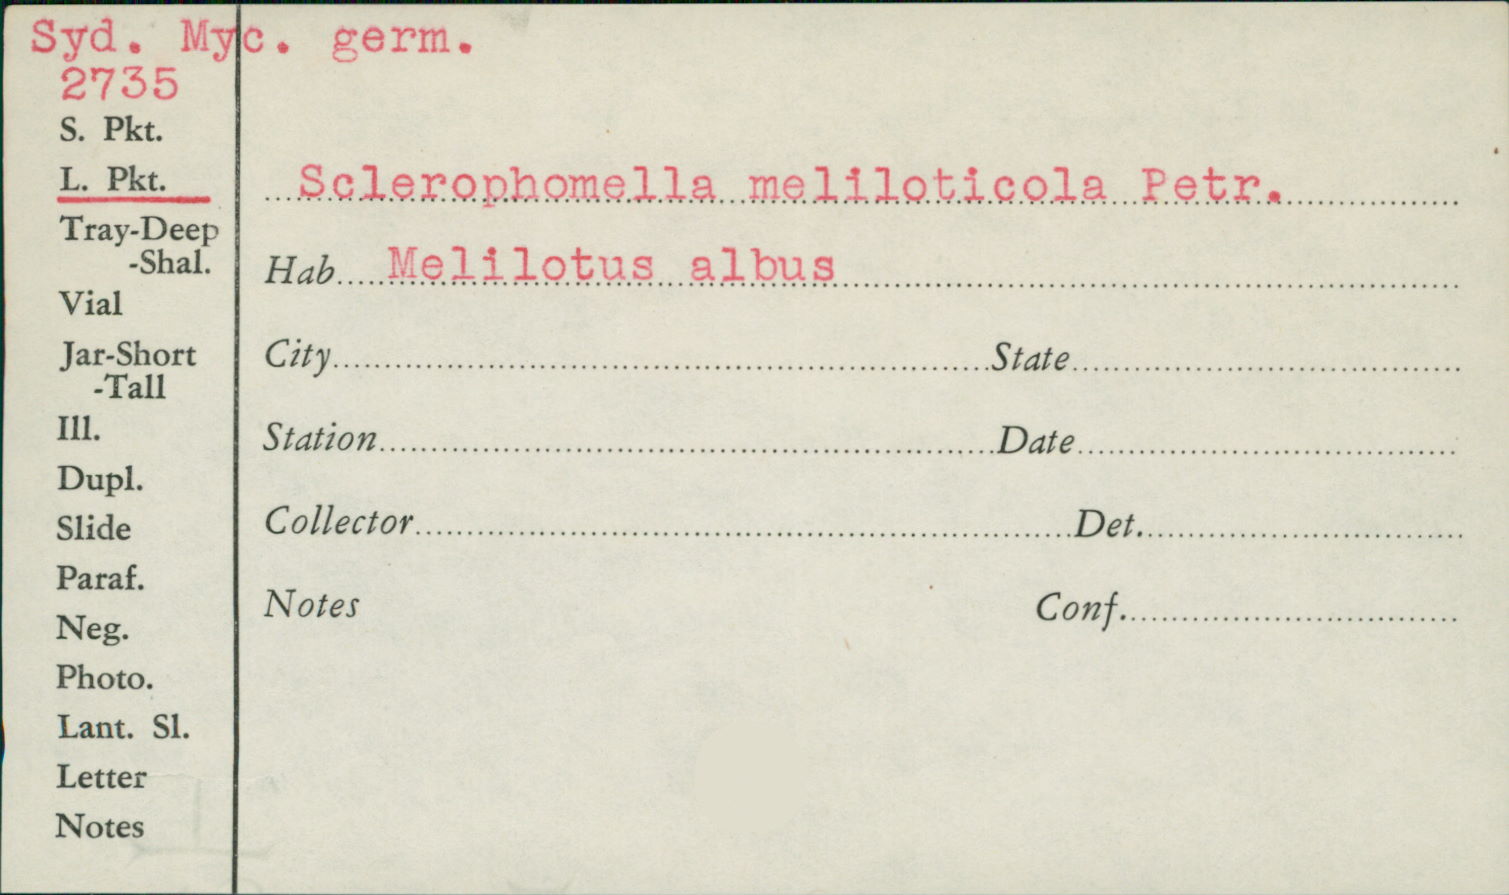 Sclerophomella meliloticola image